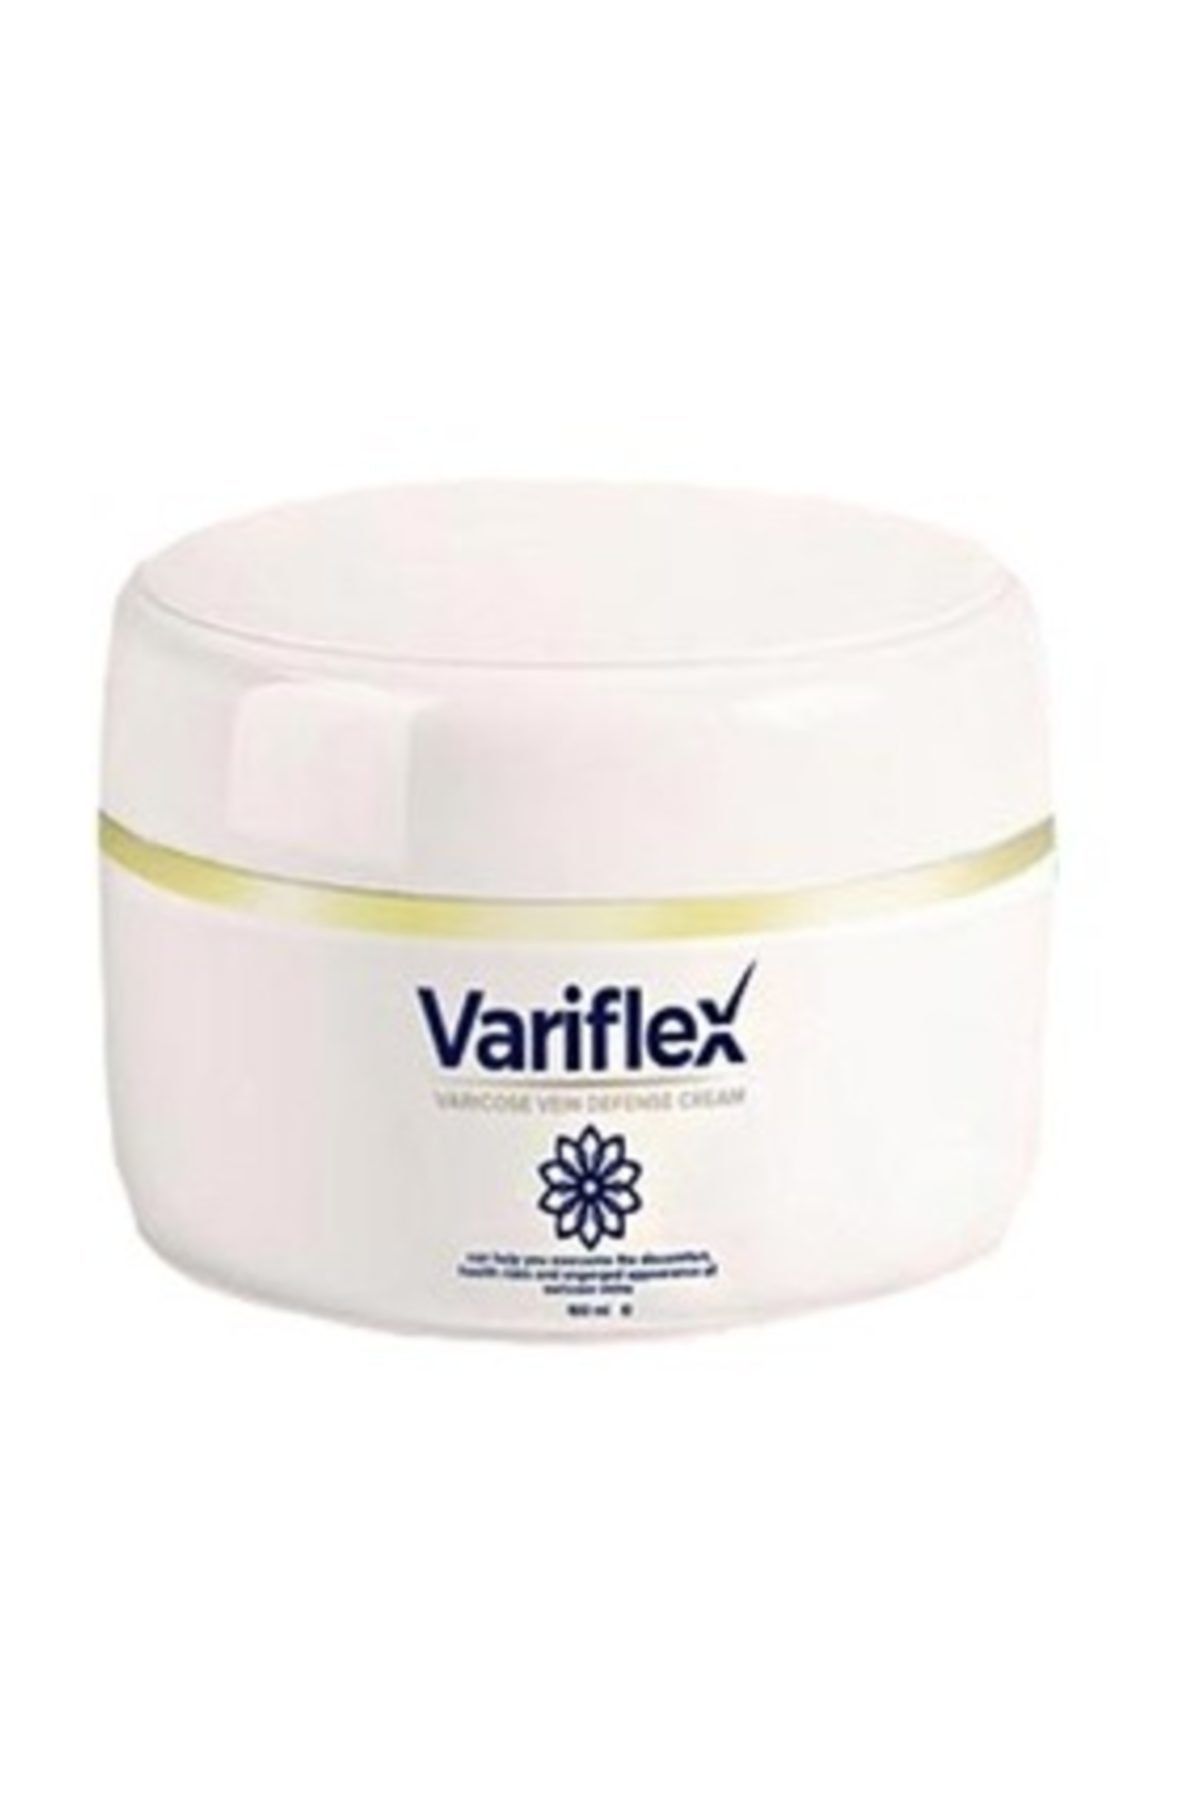 Genel Markalar Variflex Varicose Vein Defense Cream 100ml Varise Son Unisex